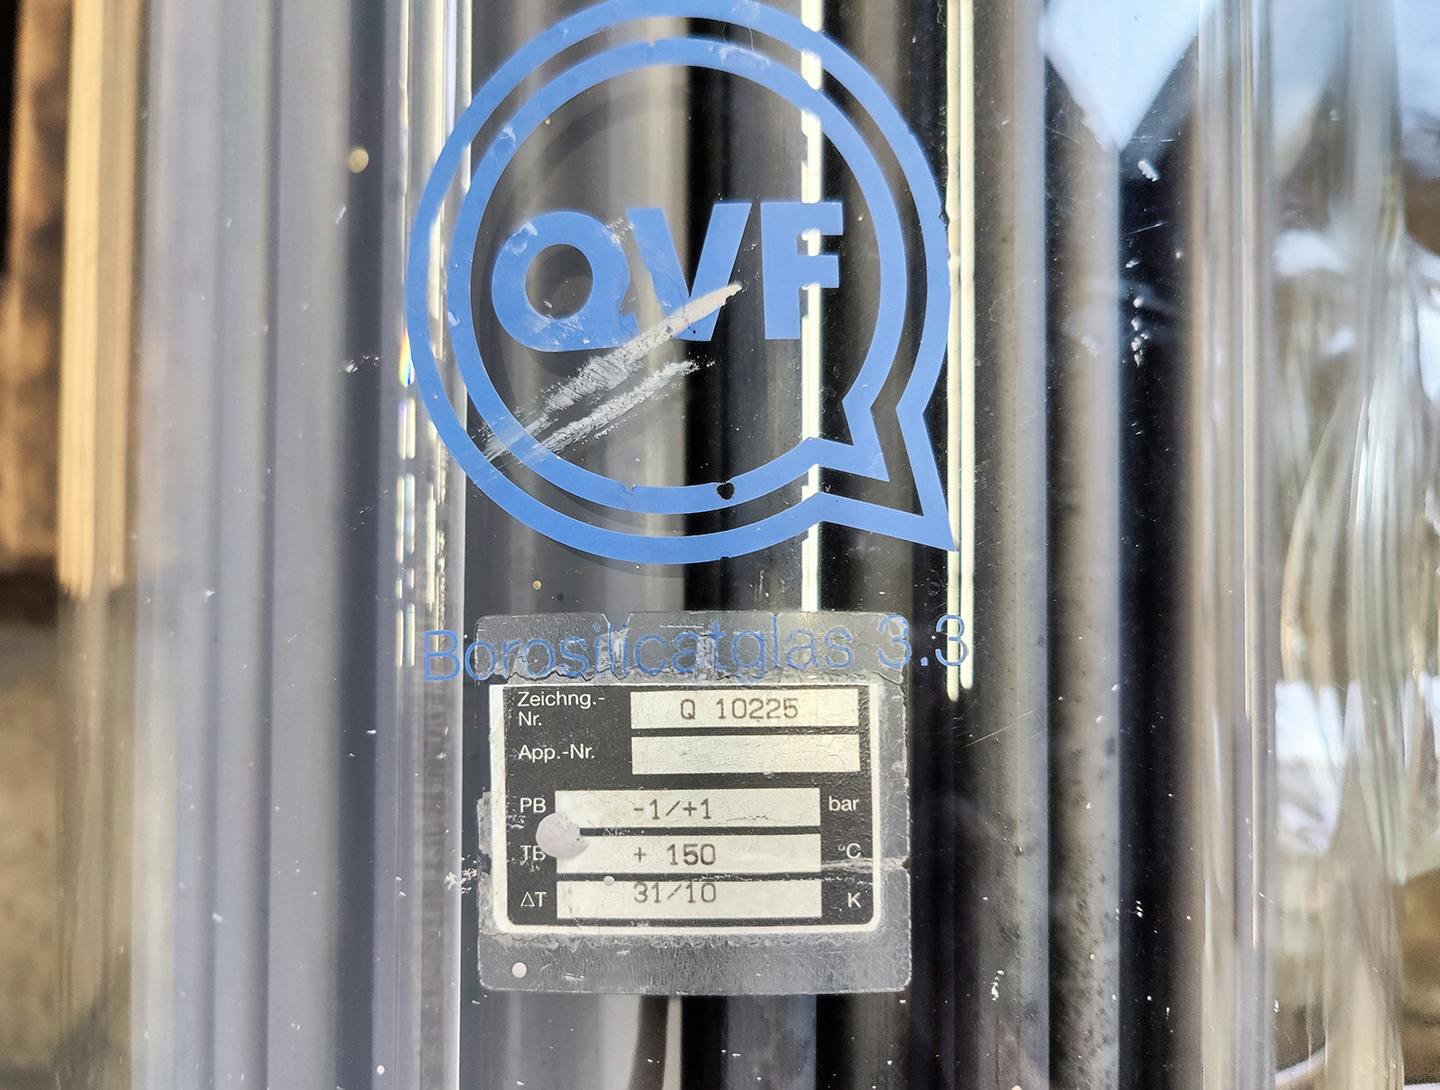 QVF Glasstechnik S-ROB71/300/SH/3SIC - 7,1 m² - Shell and tube heat exchanger - image 8